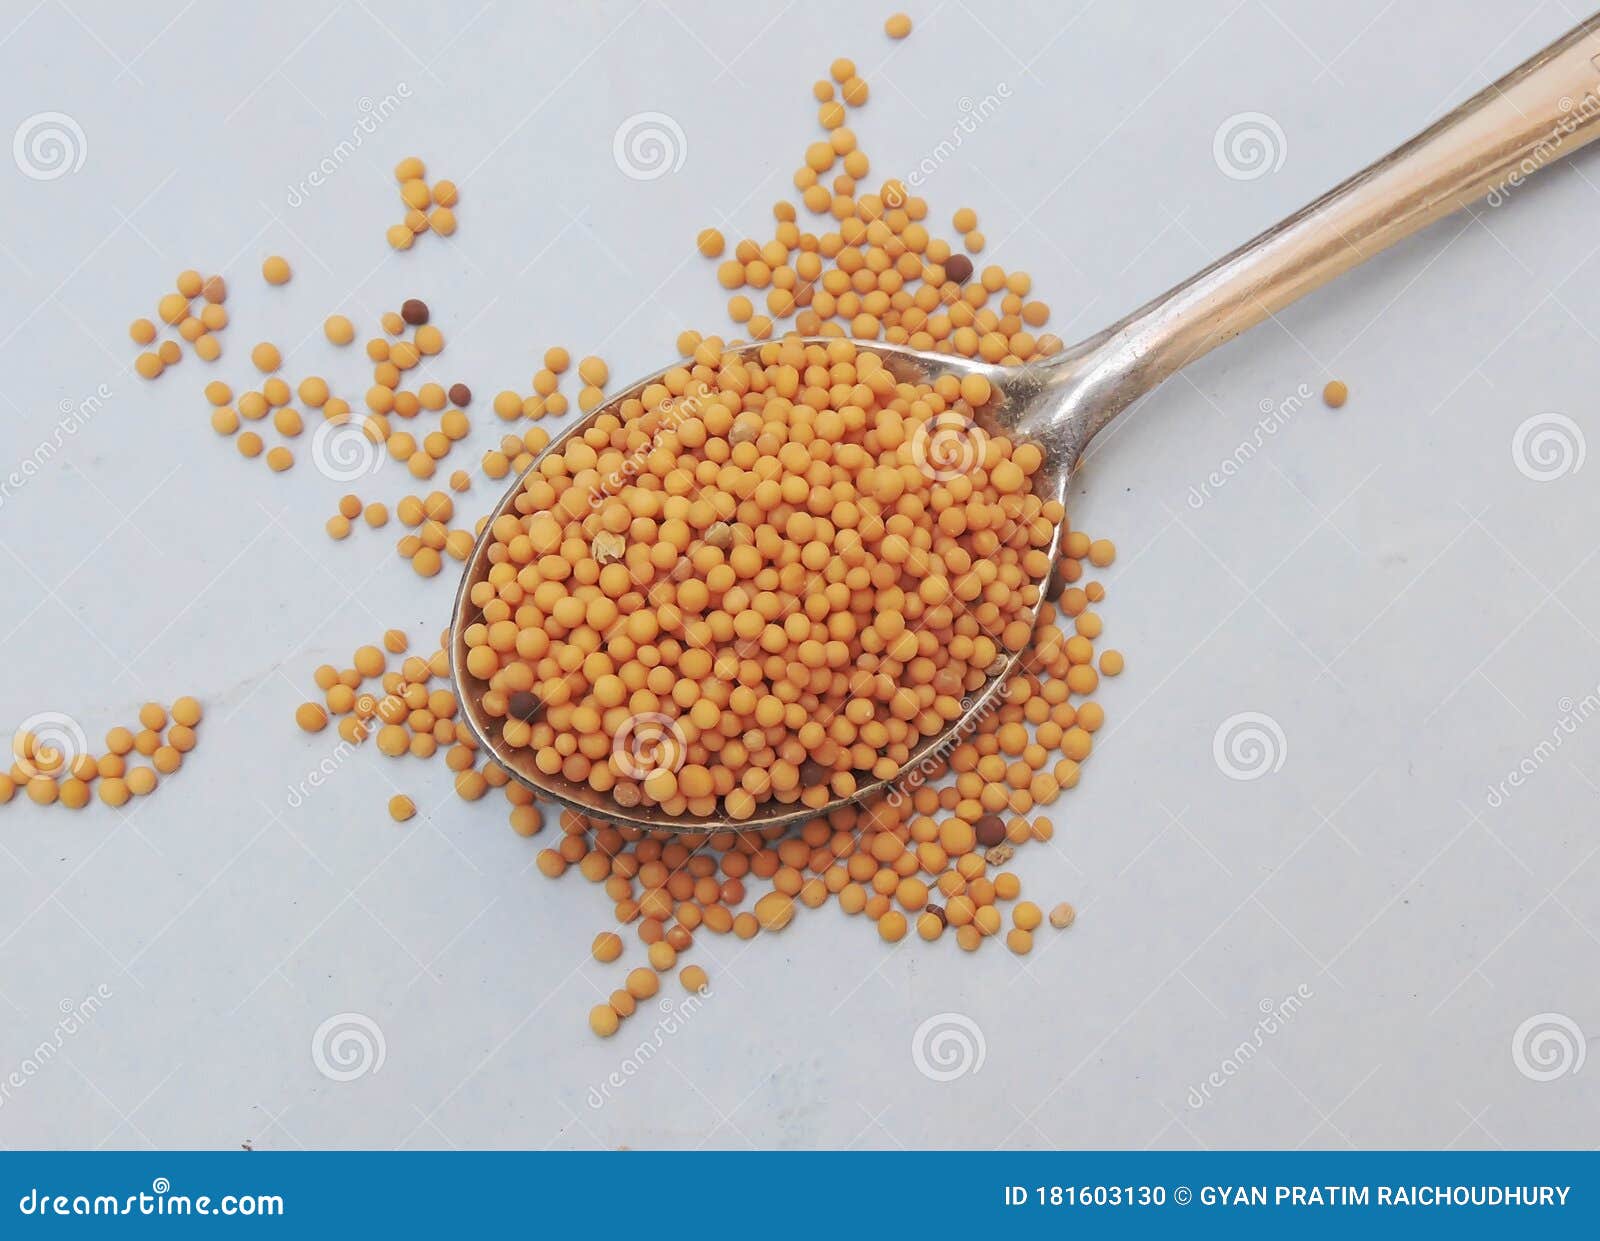 mustard seeds in  white background.